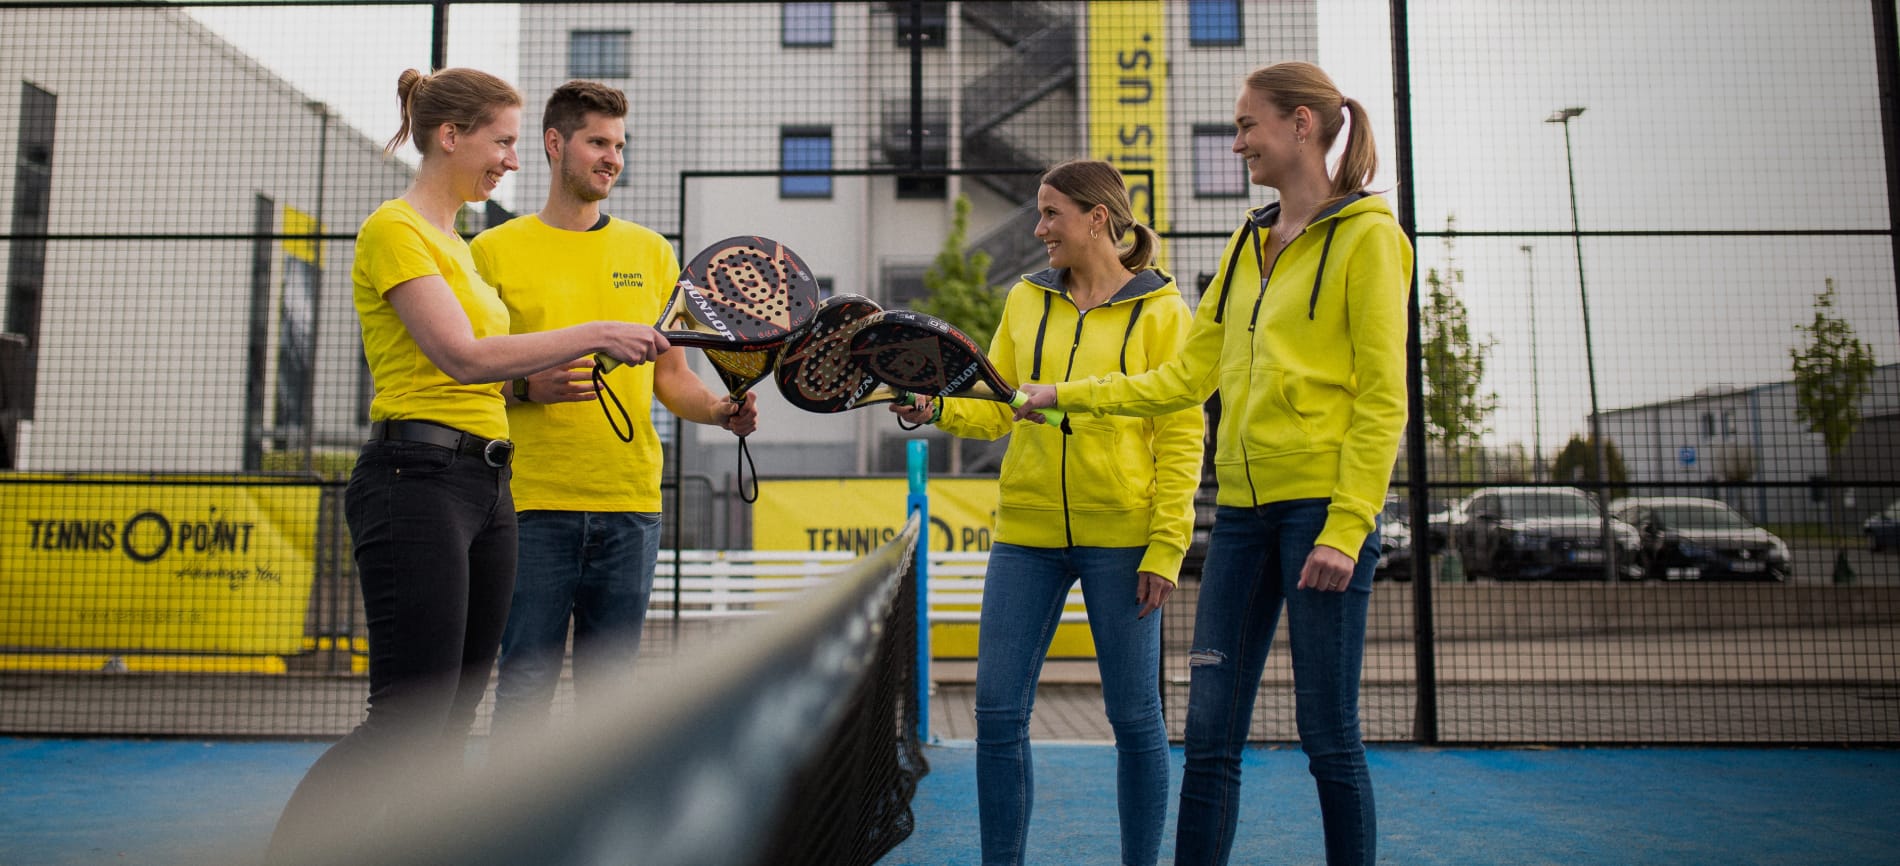 Jobs and Karriere bei Tennis-Point › Tennis-Point GmbH